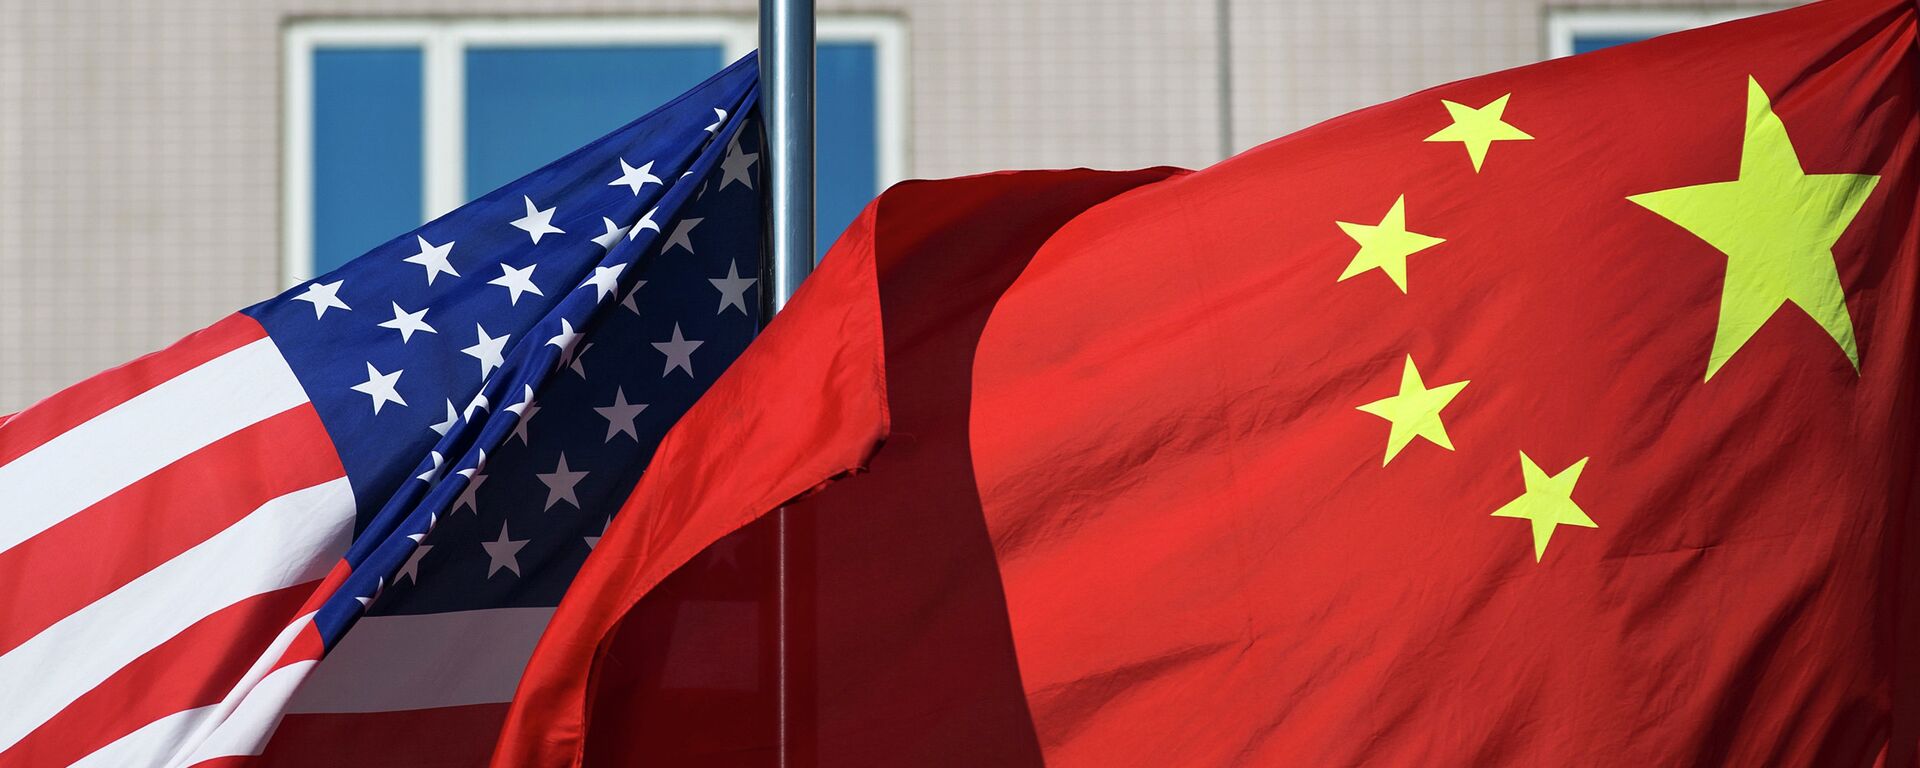 U.S. flag and China's flag flutter in winds at a hotel in Beijing Wednesday, Sept. 5, 2012 - Sputnik Mundo, 1920, 26.07.2021